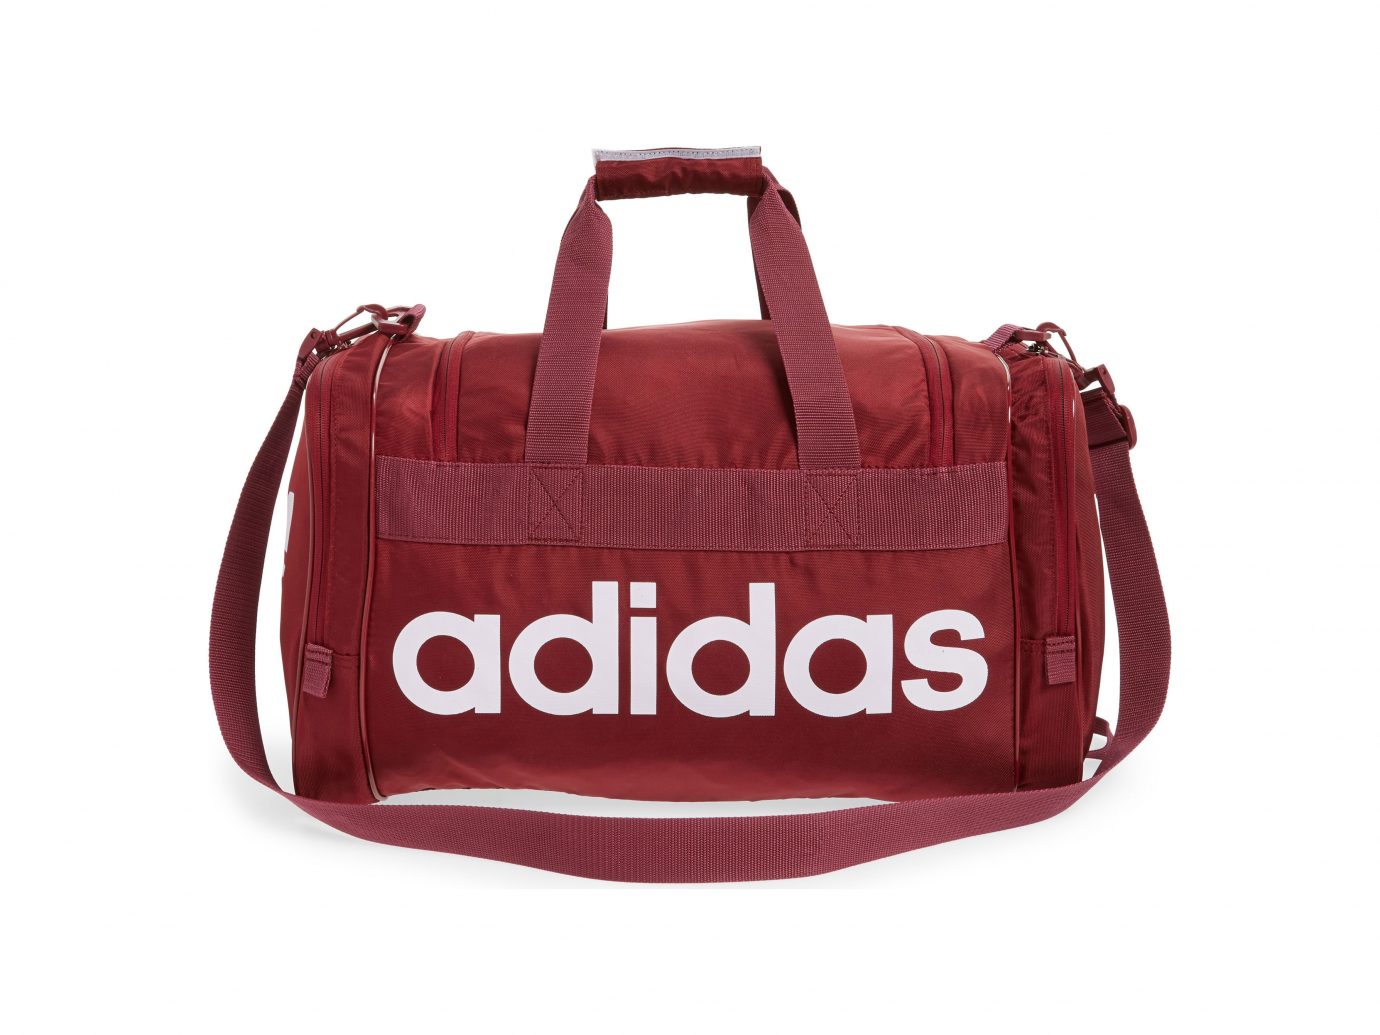 Adidas Original Santiago Duffel Bag